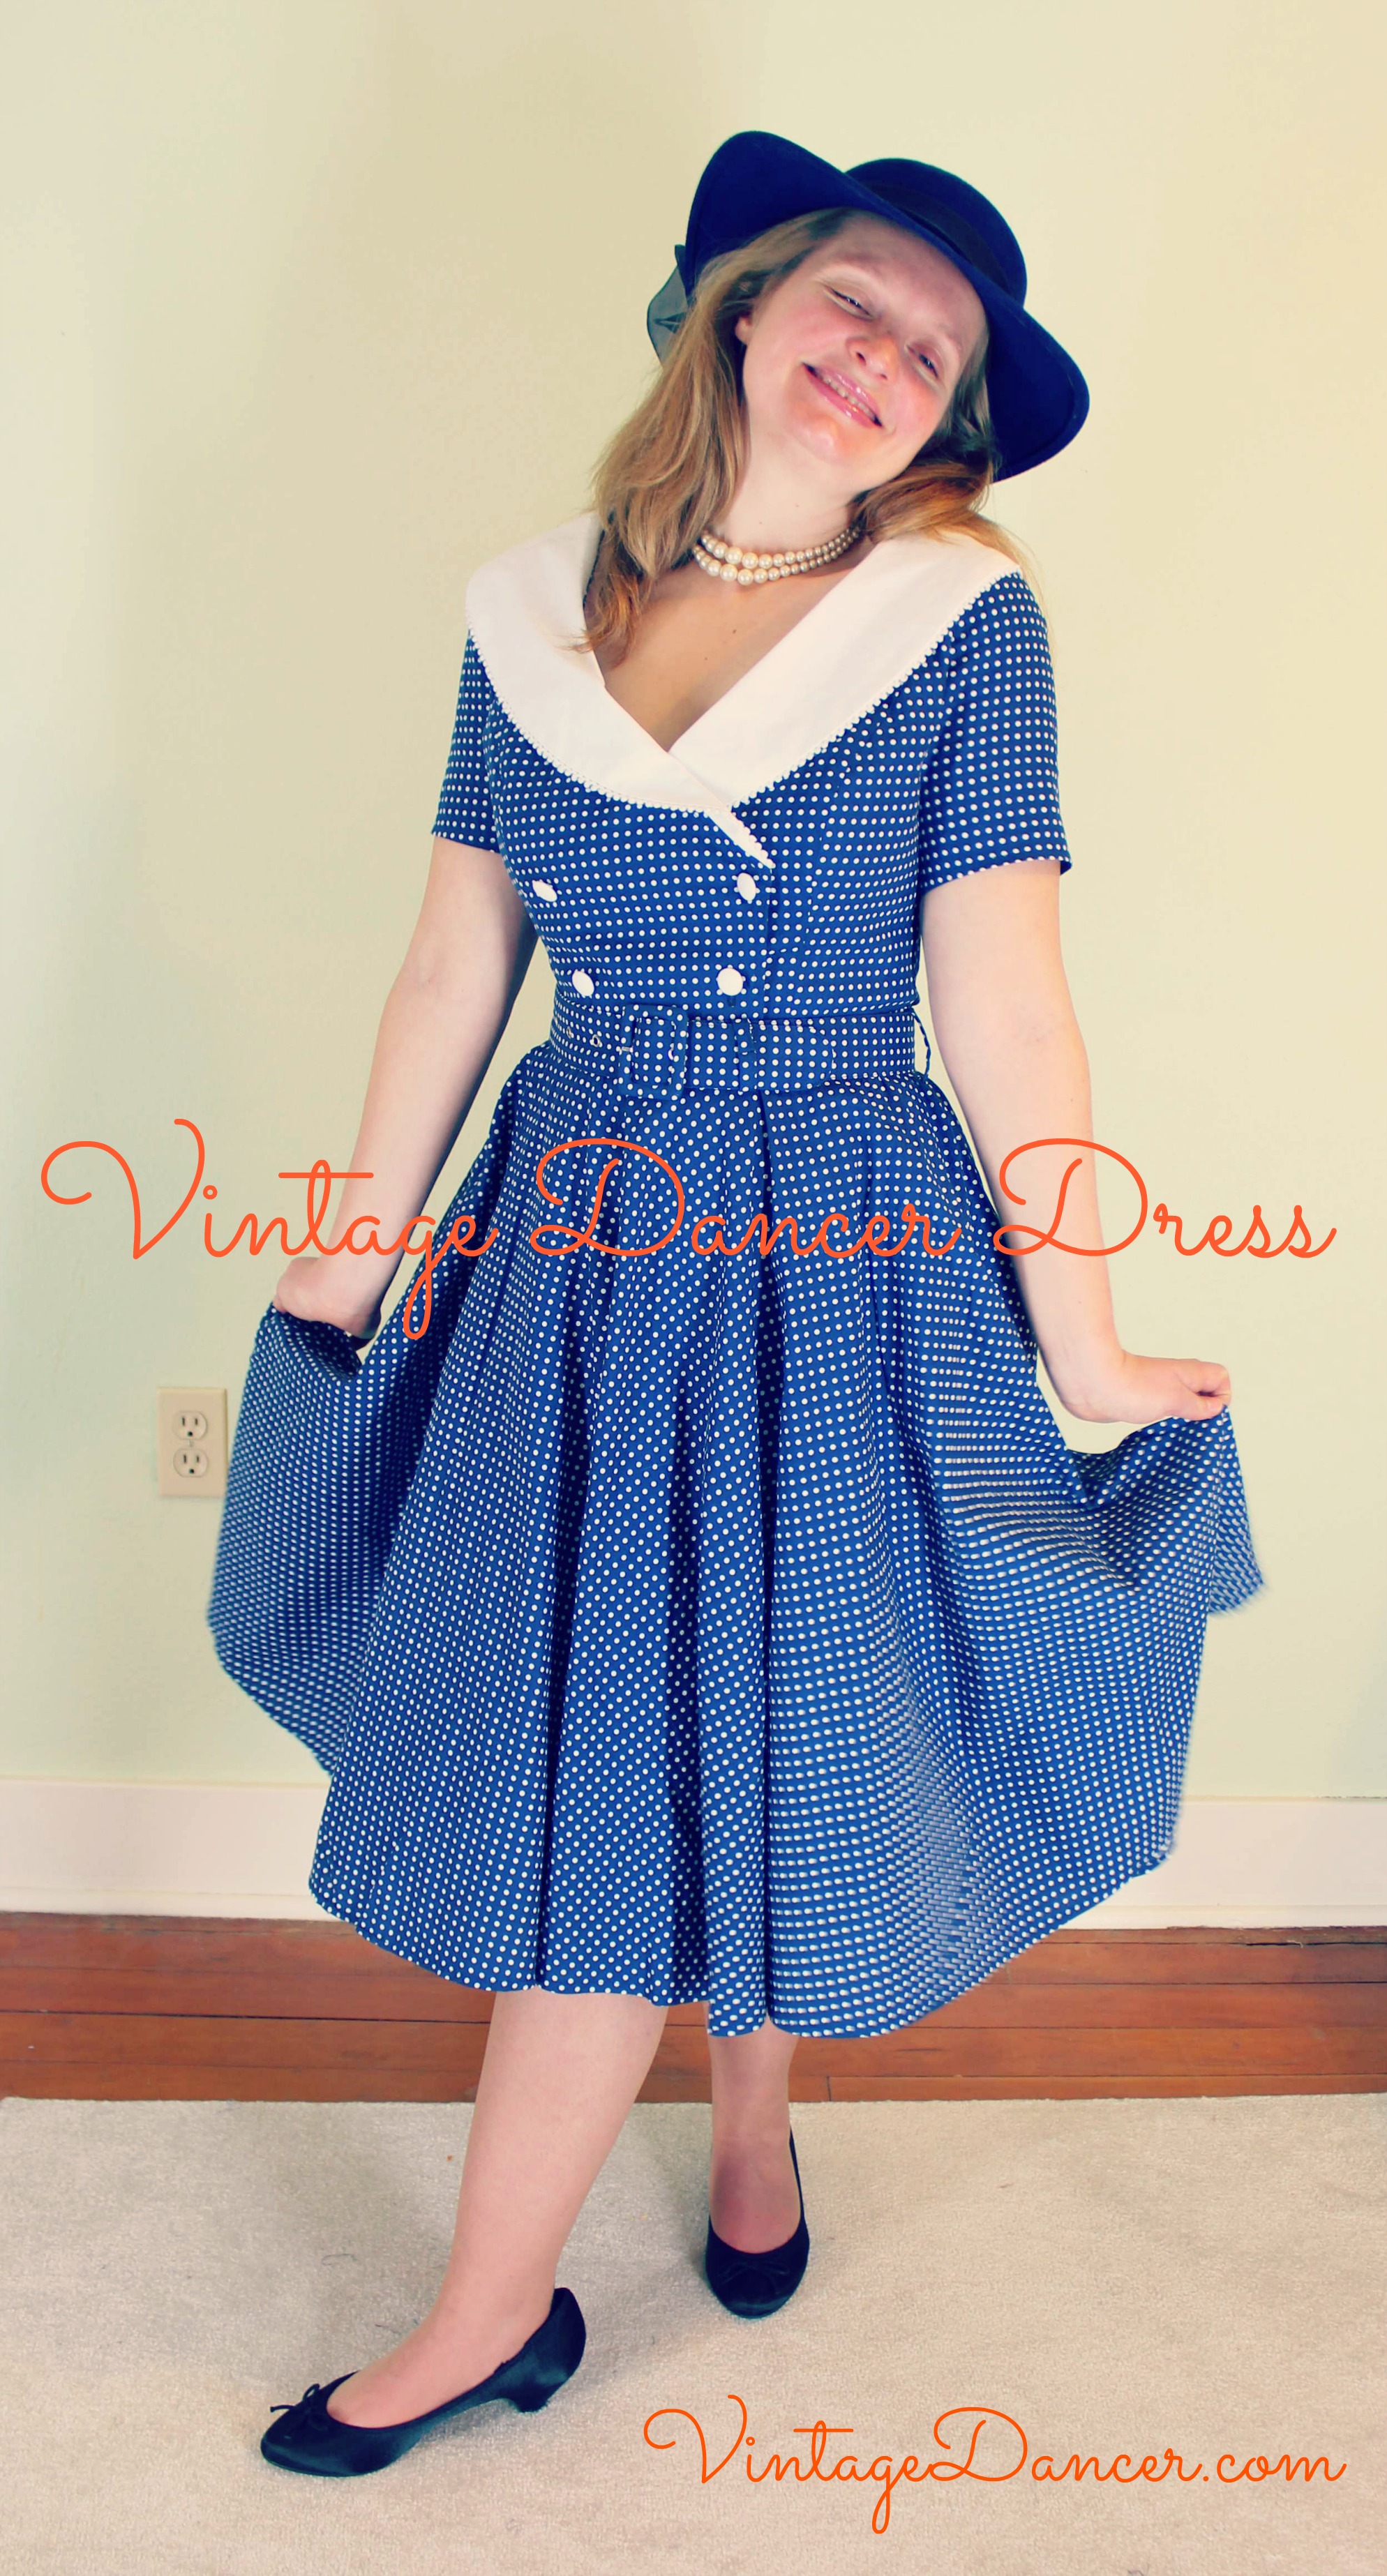 The Vintage Dancer Dress -1950s Swing Dress Review